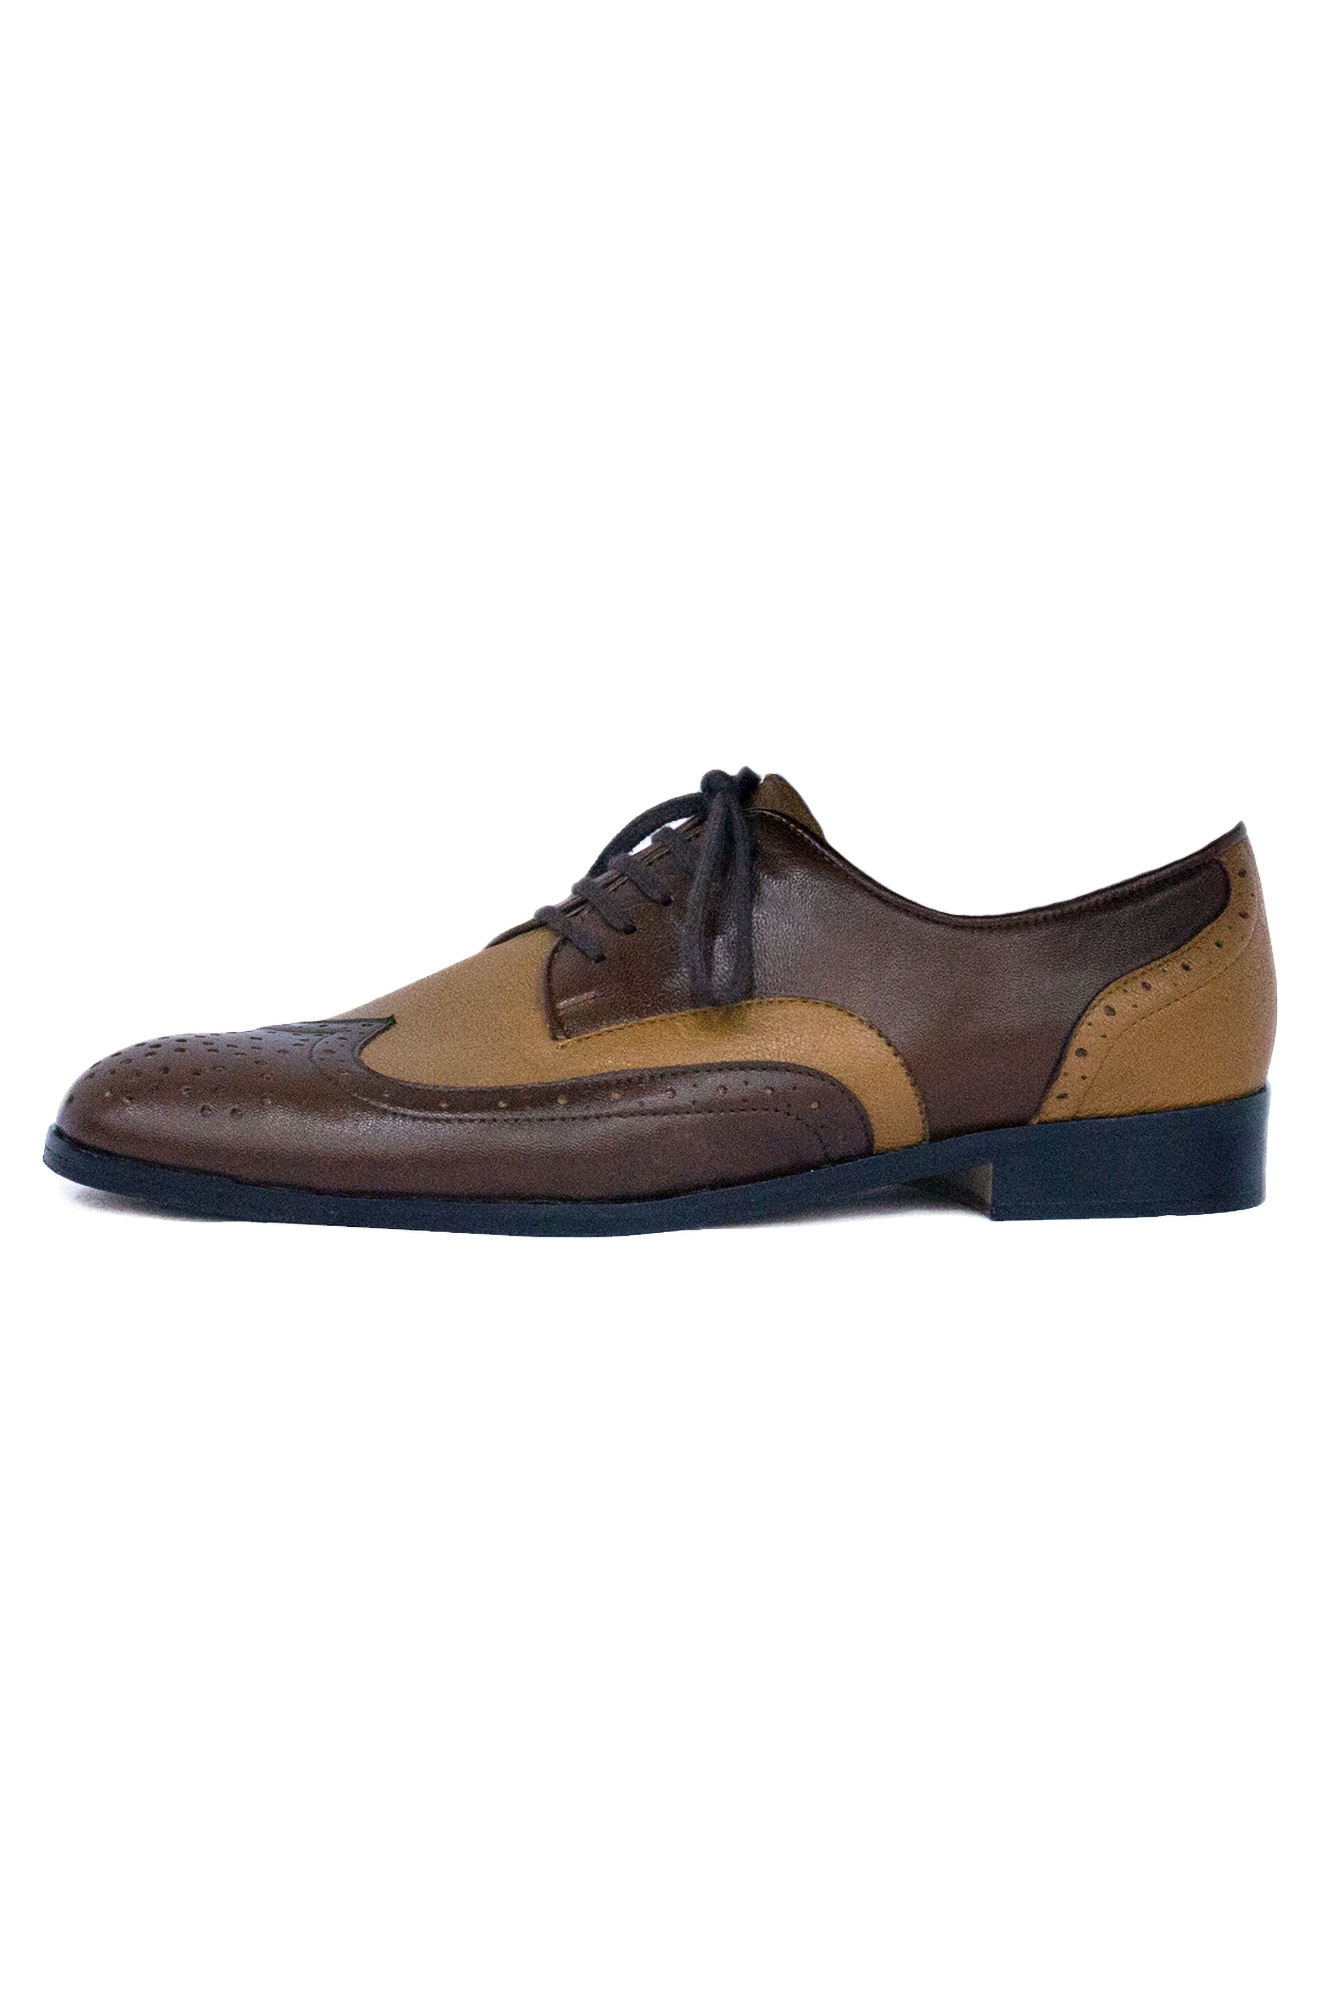 discount Lyricist Courageous Pantofi din piele naturala, Triple Step, Model Oxford, doua culori, Marime  43EU - eMAG.ro